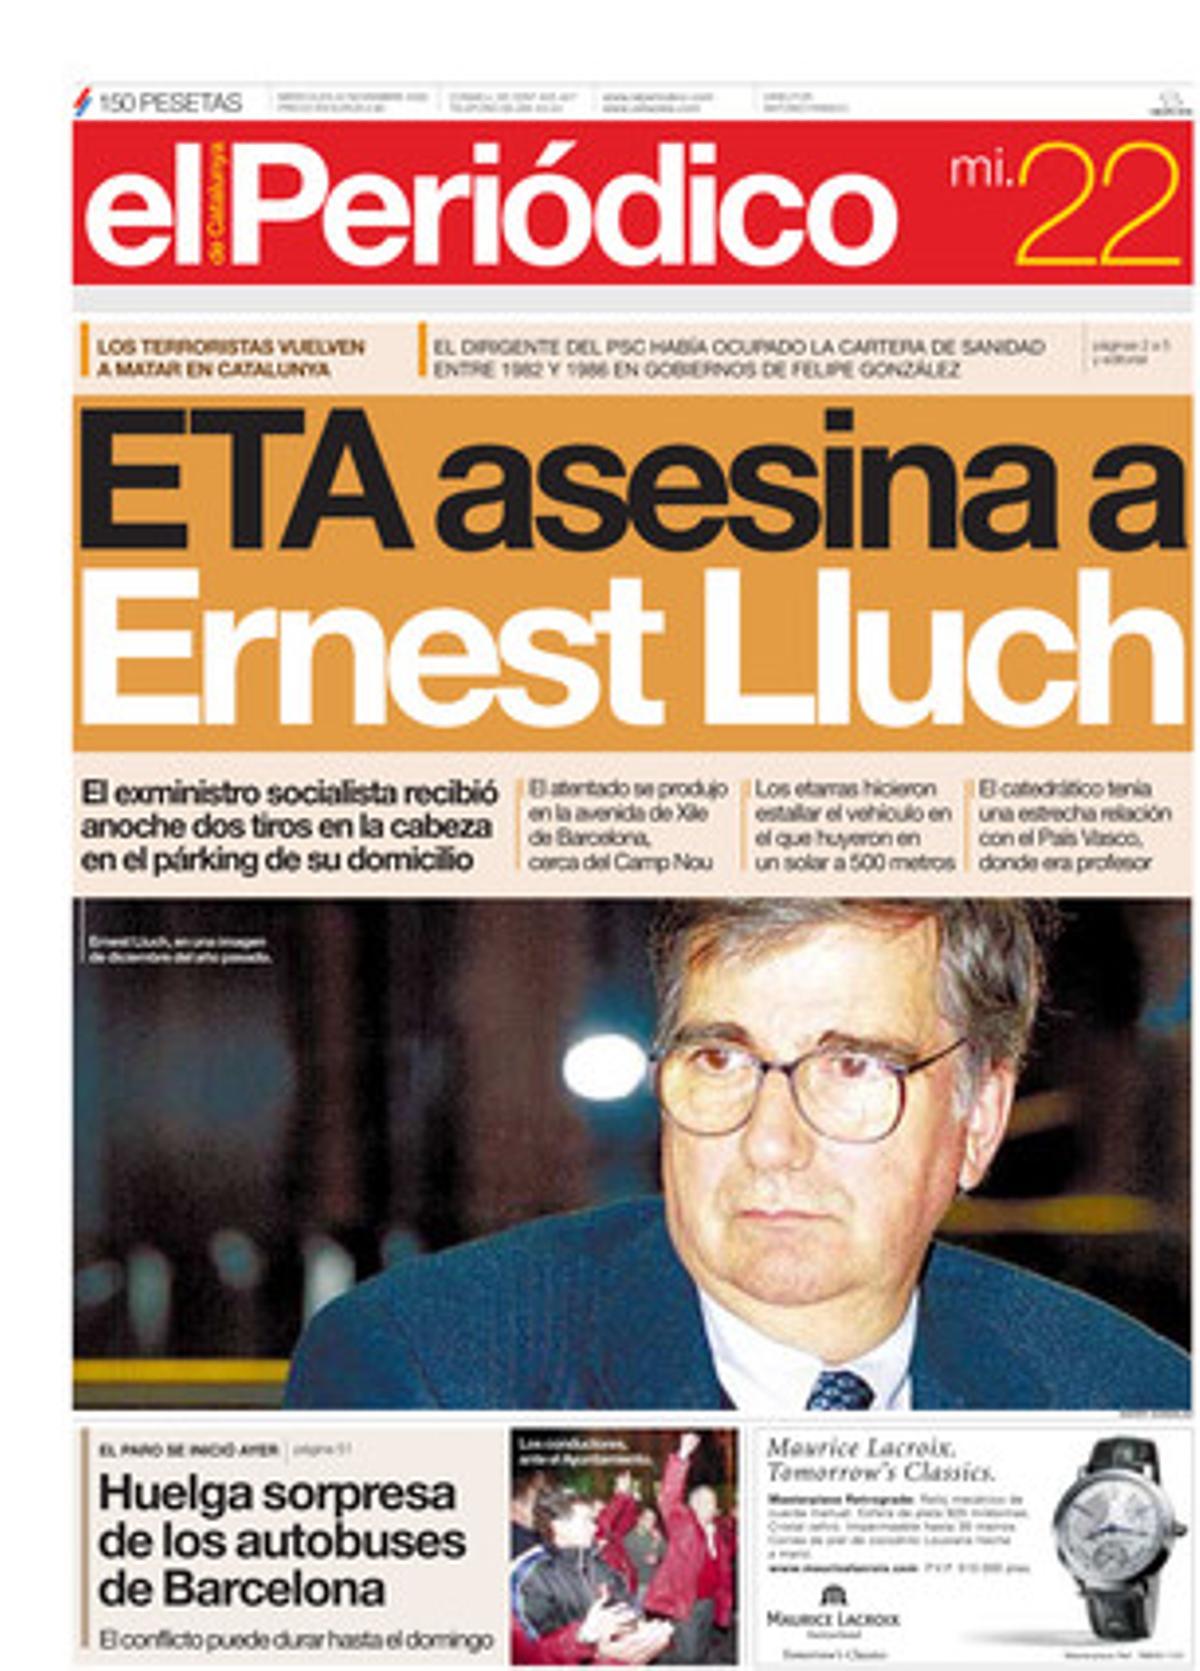 La banda terrorista asesina a Ernest Lluch. 22/11/2000